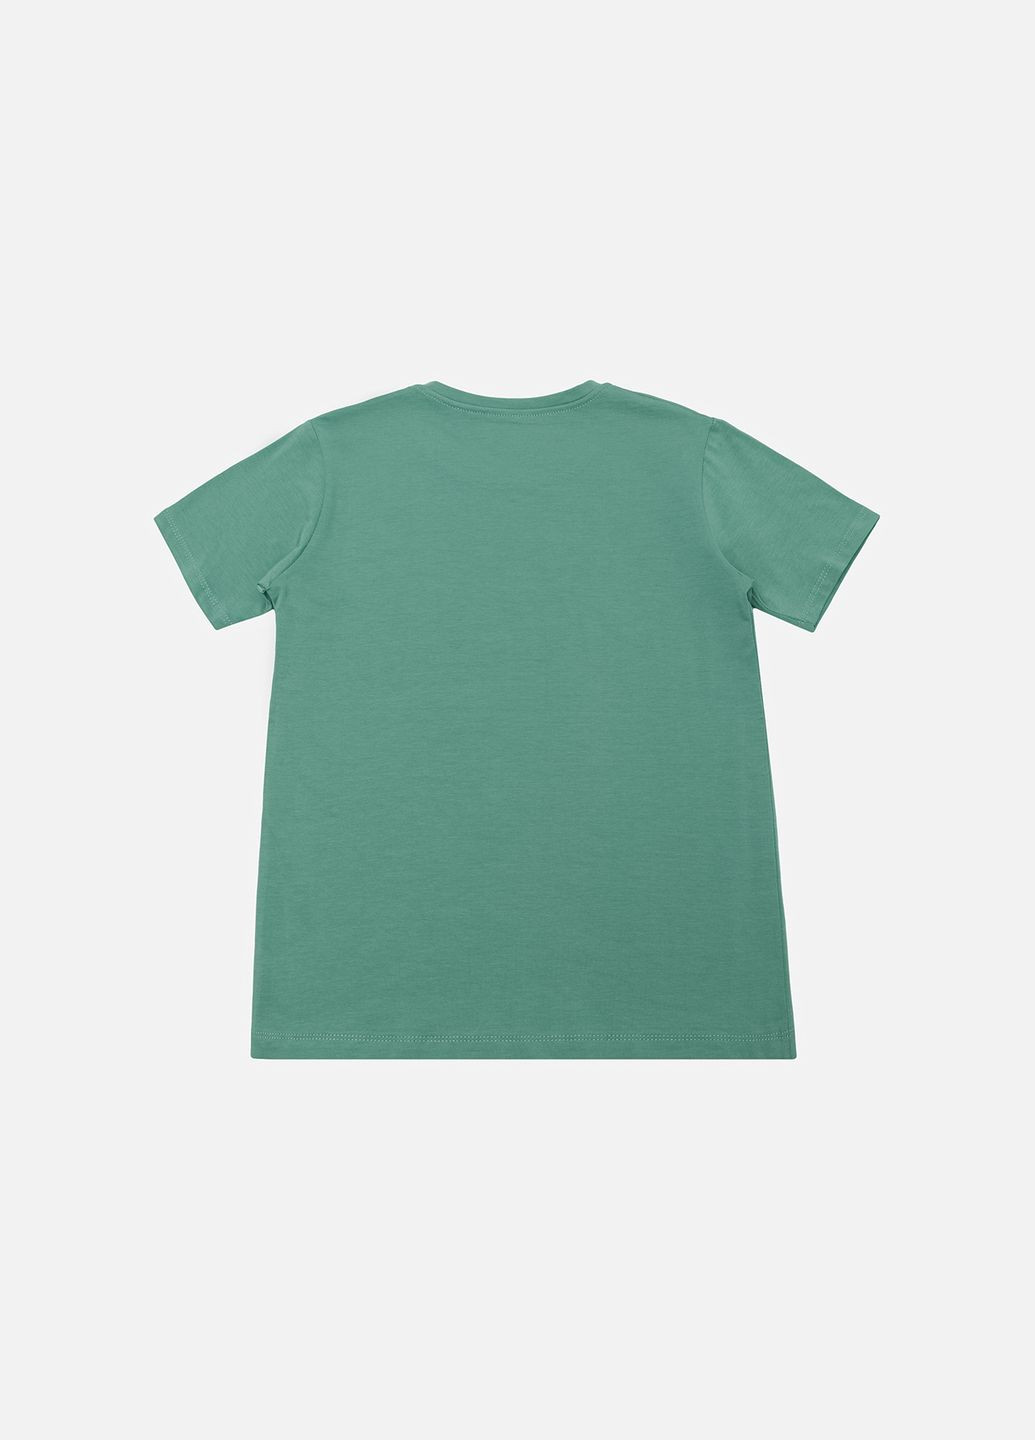 Зеленая летняя футболка для мальчика цвет зеленый цб-00223114 Galilatex